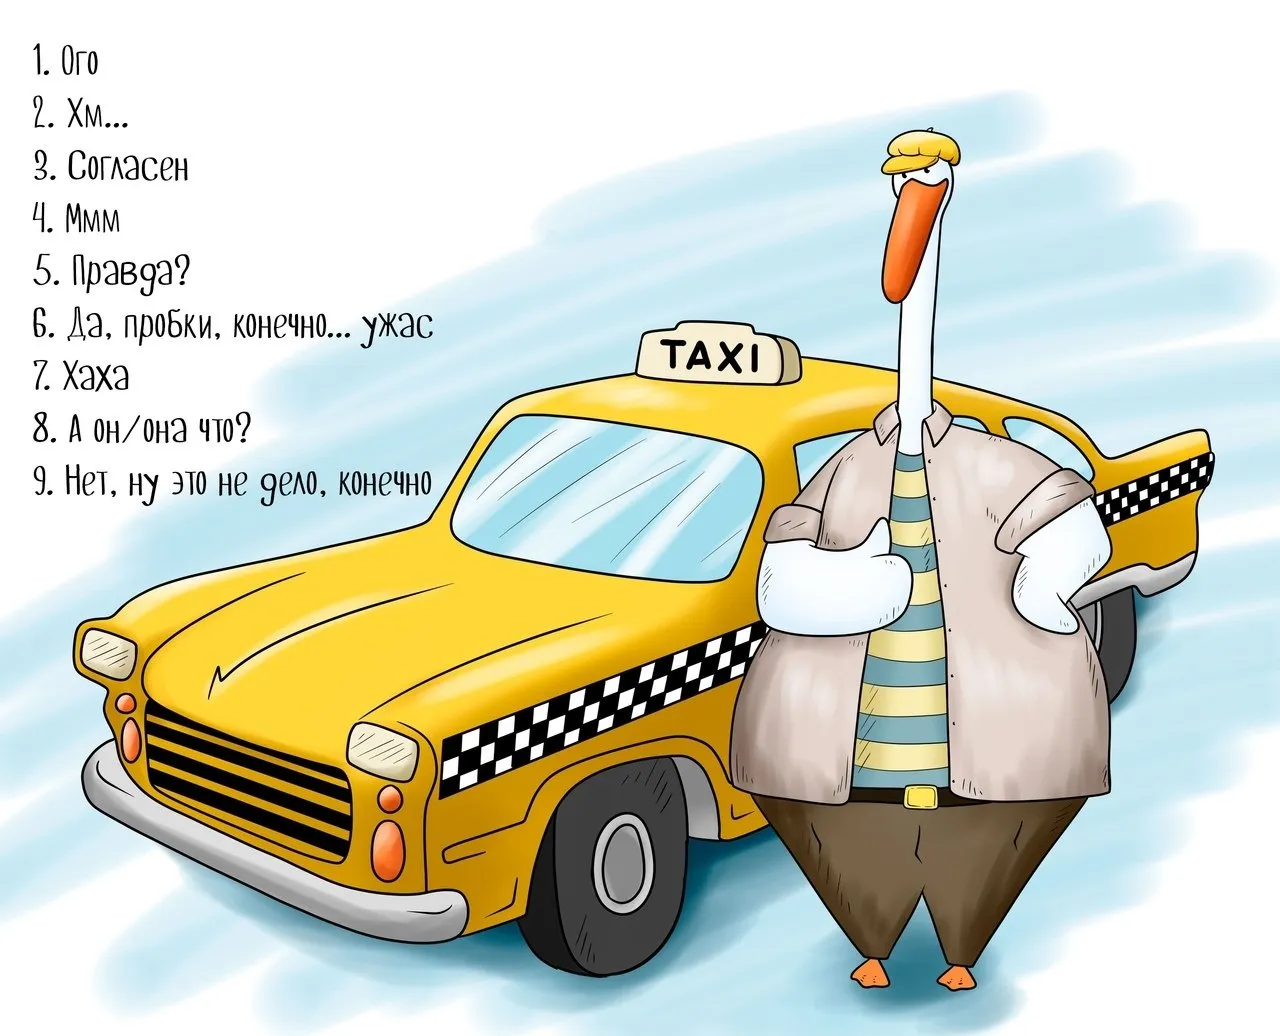 Шутки про такси. Таксист прикол. Шутки про таксистов в картинках. Смешные шутки про такси. Take car taxi